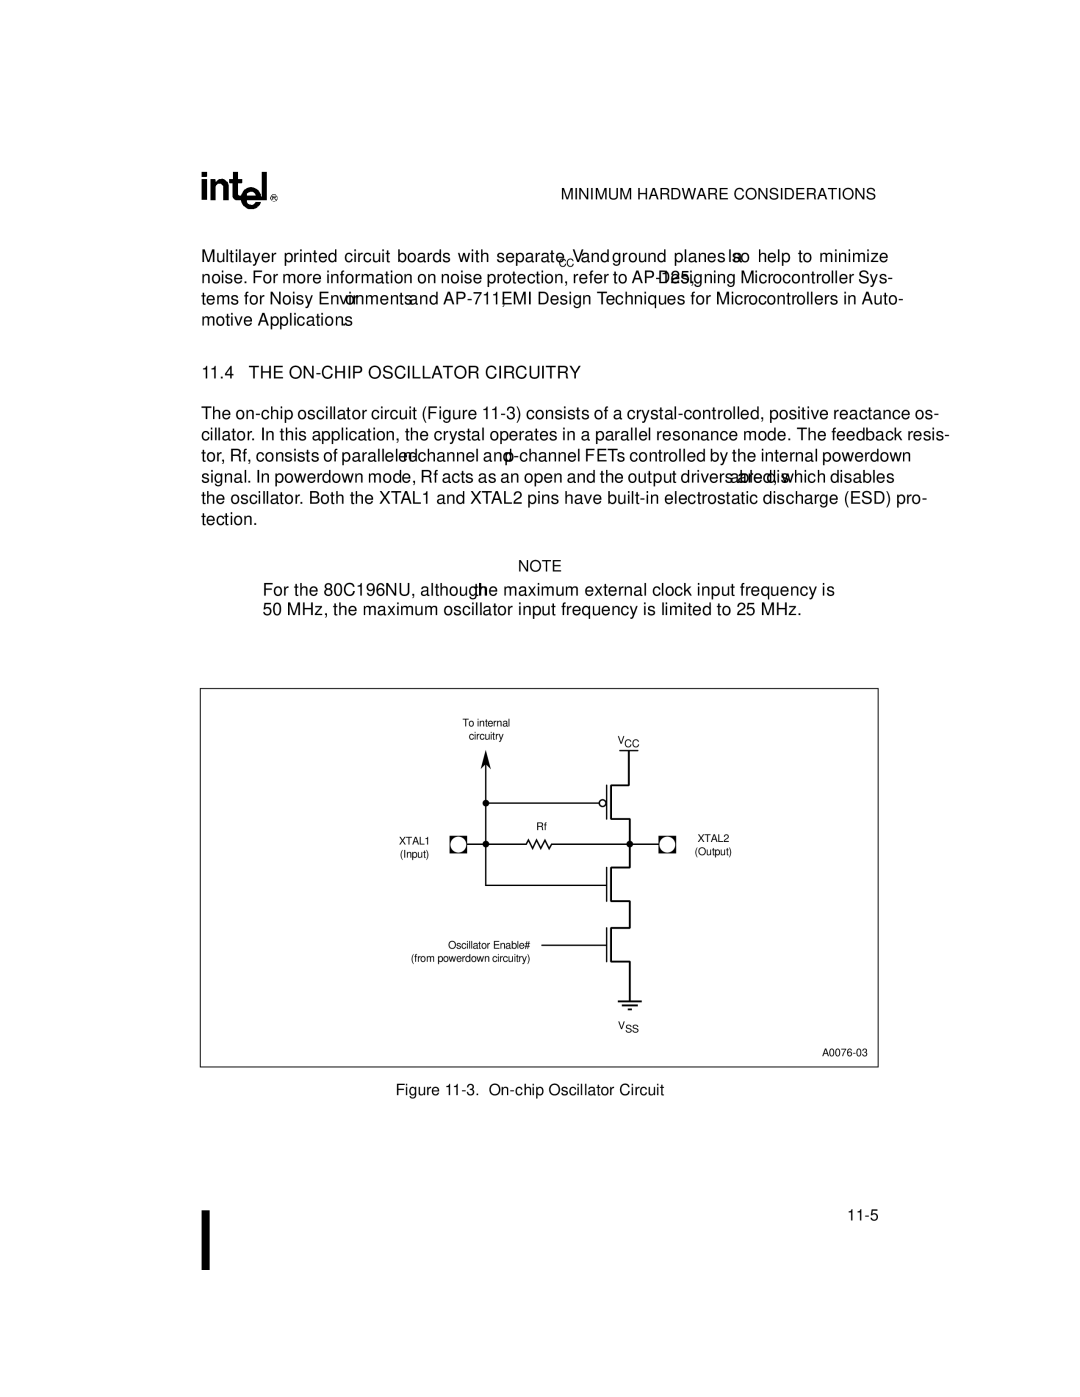 Intel 8XC196NP, 80C196NU, Microcontroller manual ON-CHIP Oscillator Circuitry, On-chip Oscillator Circuit 